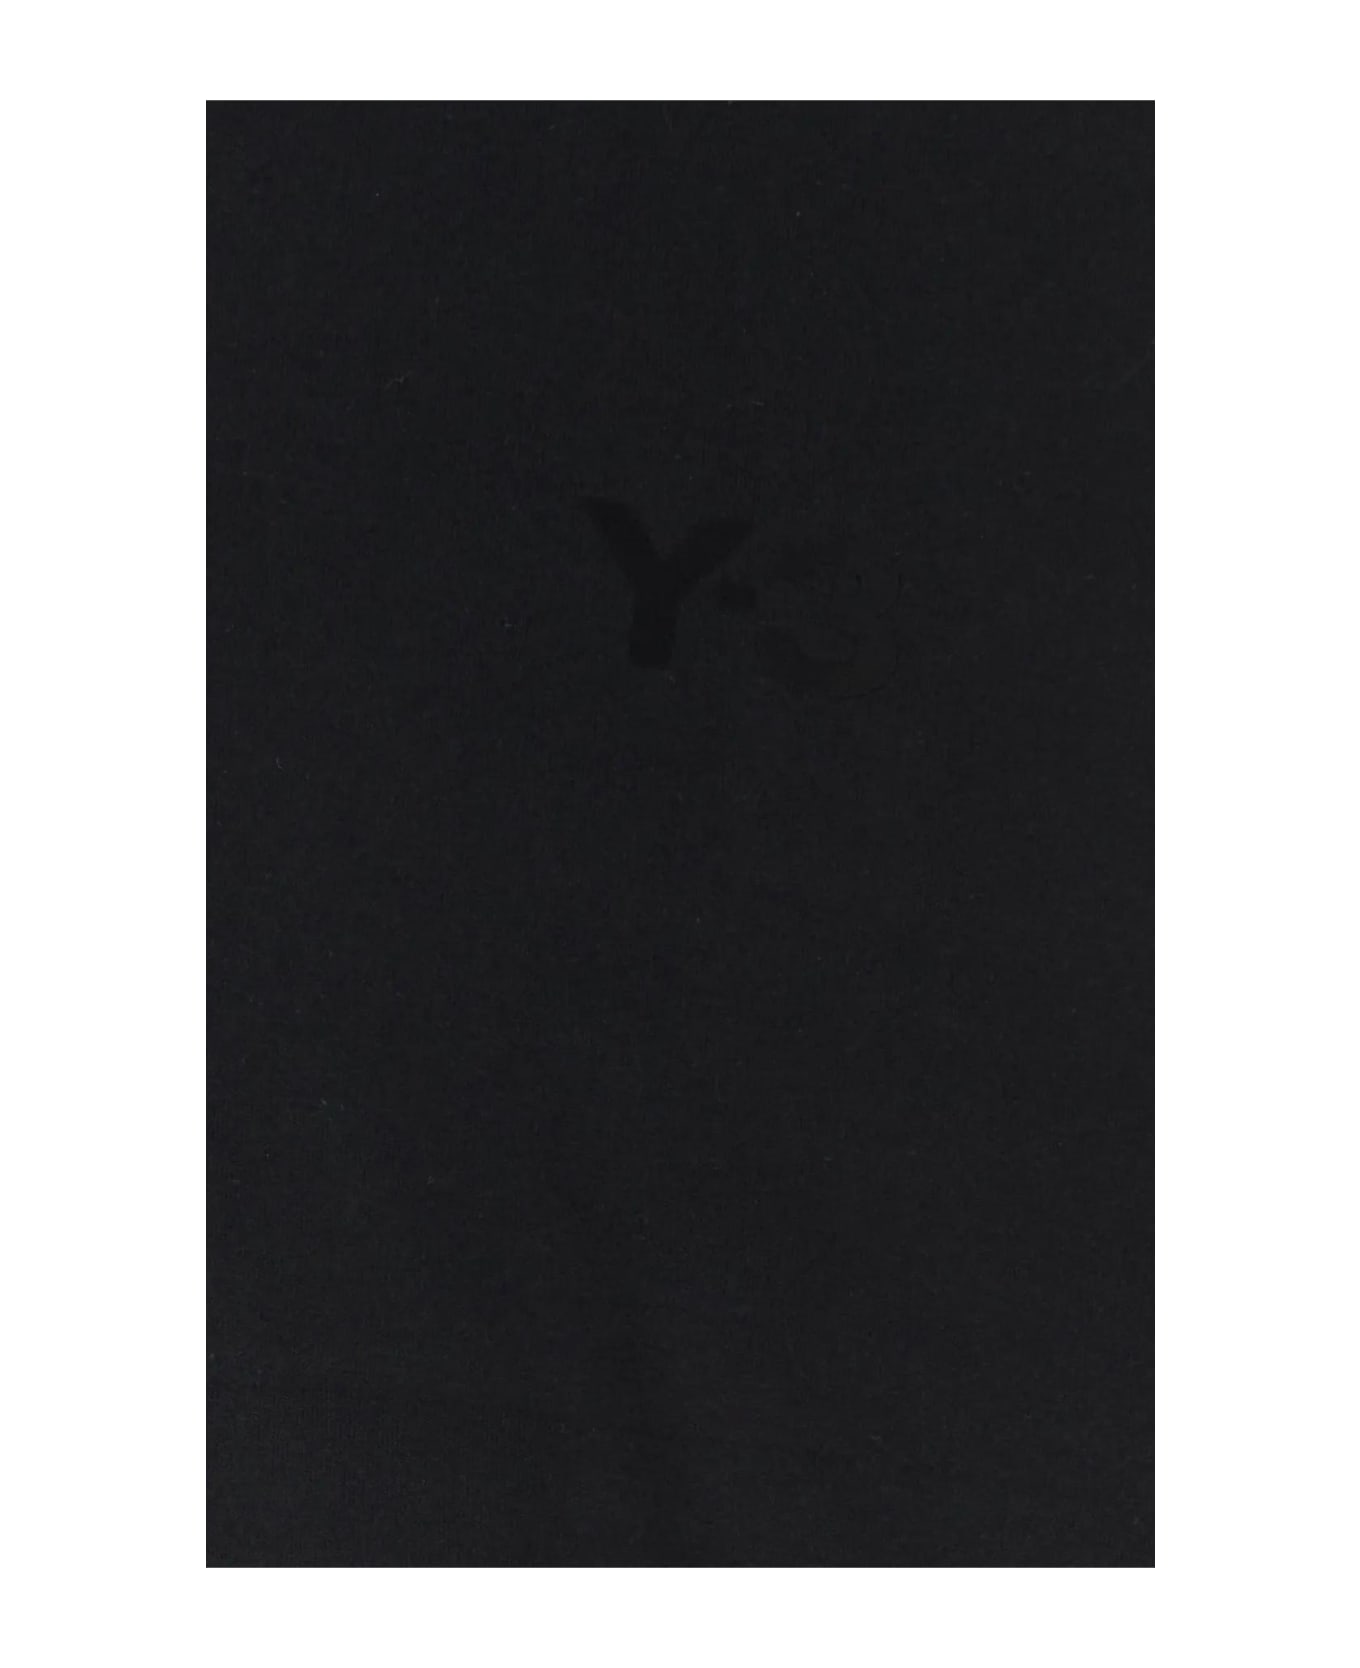 Y-3 Black Cotton T-shirt - Black